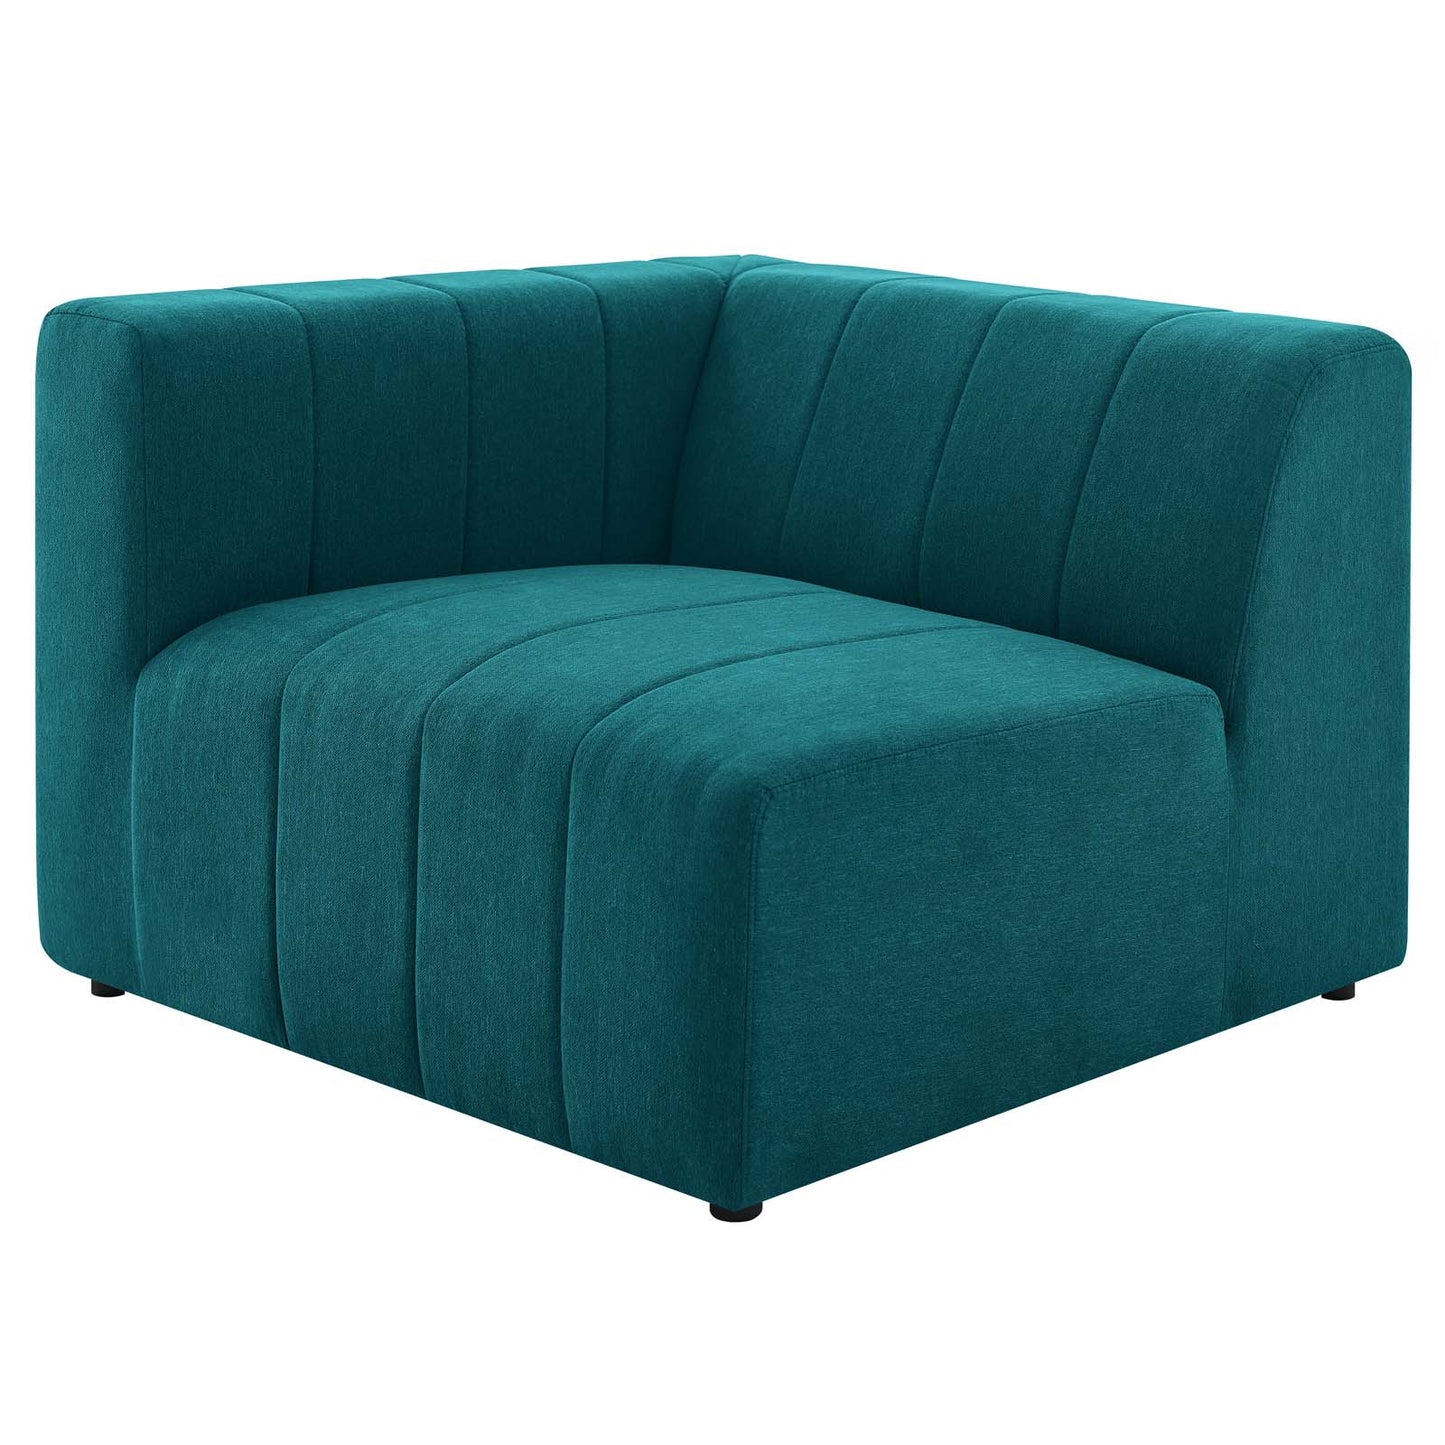 Bartlett Upholstered Fabric Left-Arm Chair Teal EEI-4396-TEA